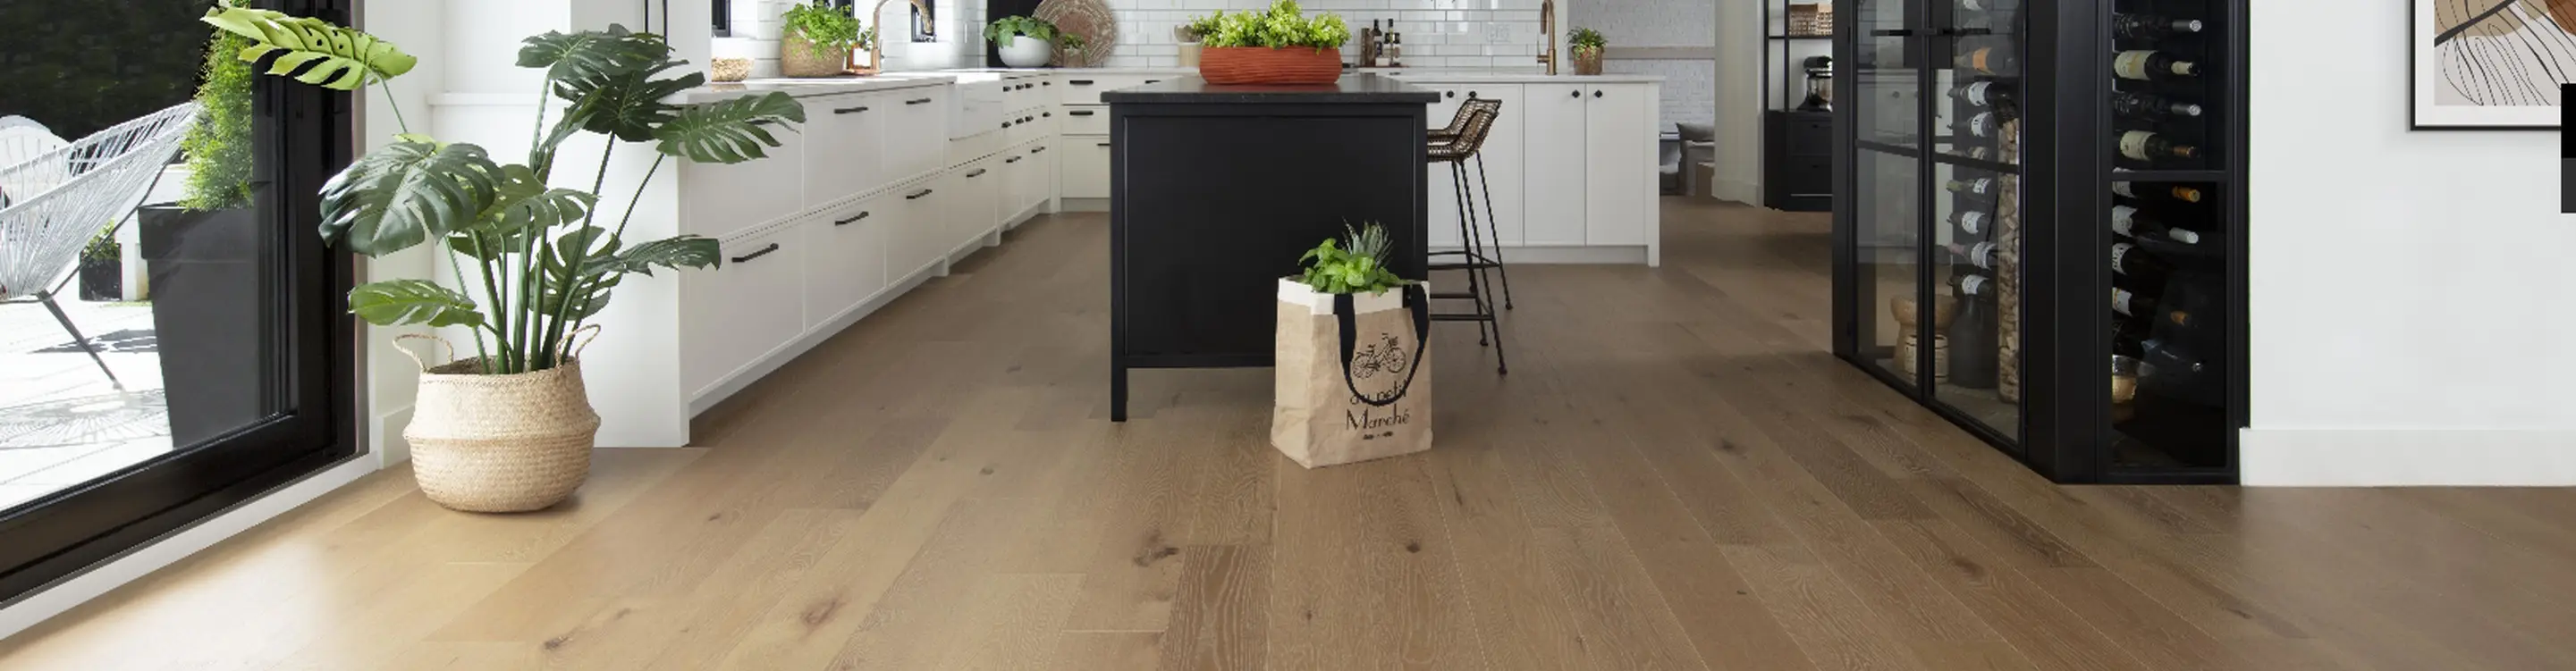 hardwood flooring in kitchen 